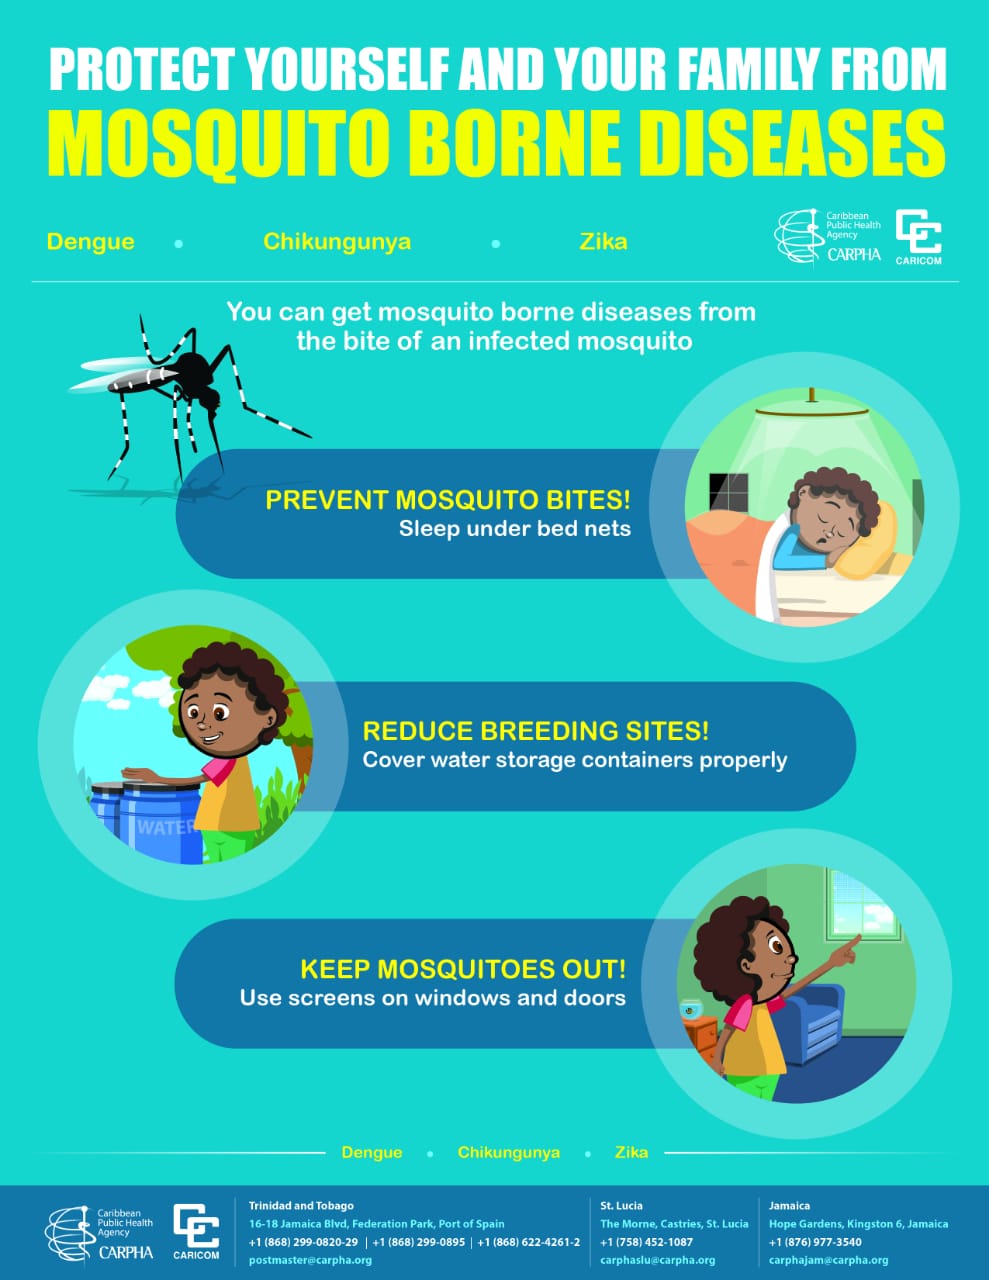 Dengue Fever Guidelines